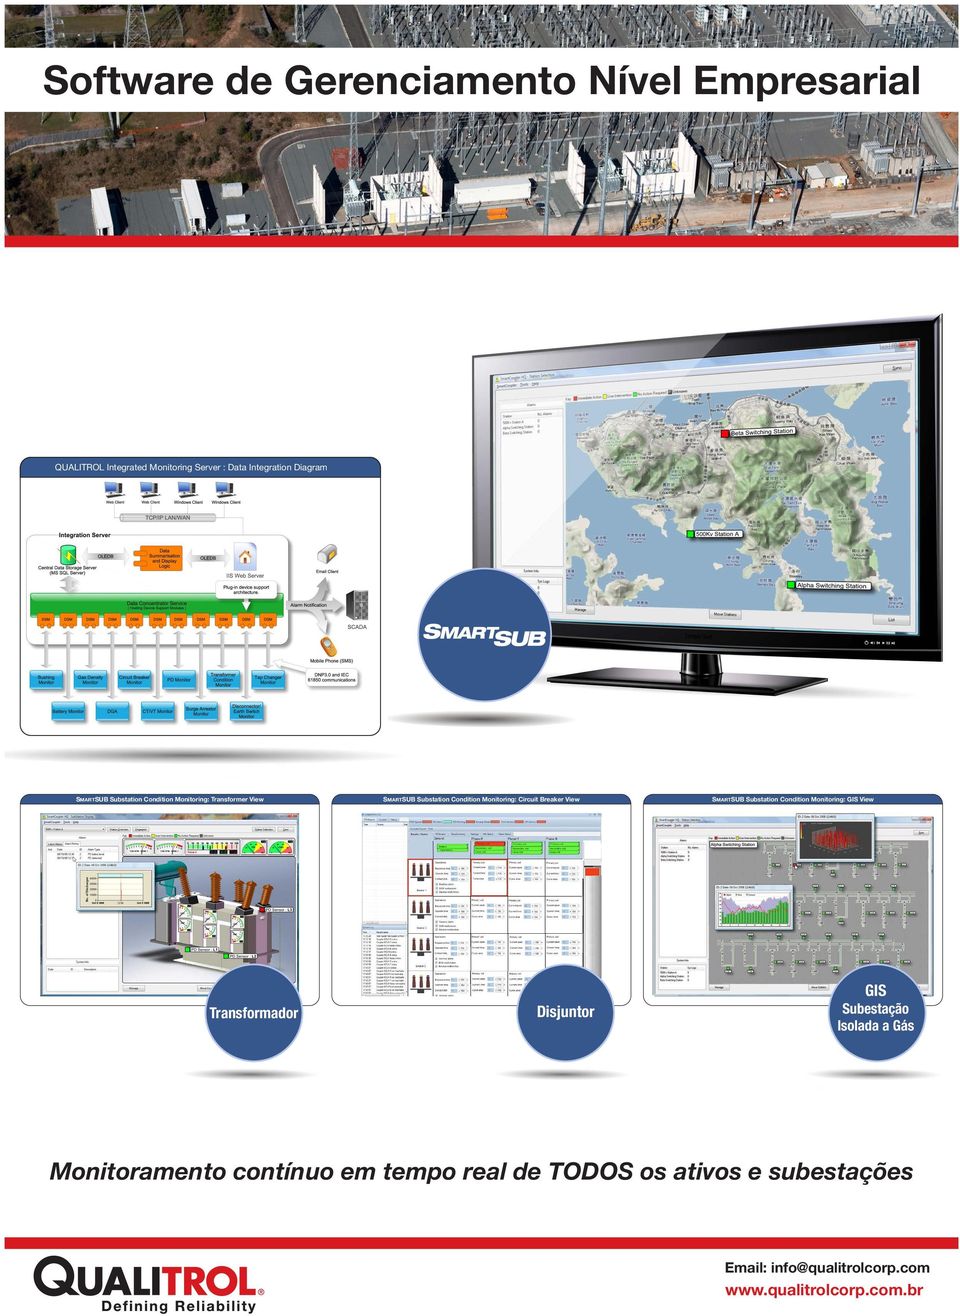 Monitoring: Circuit Breaker View SMARTSUB Substation Condition Monitoring: GIS View Transformador